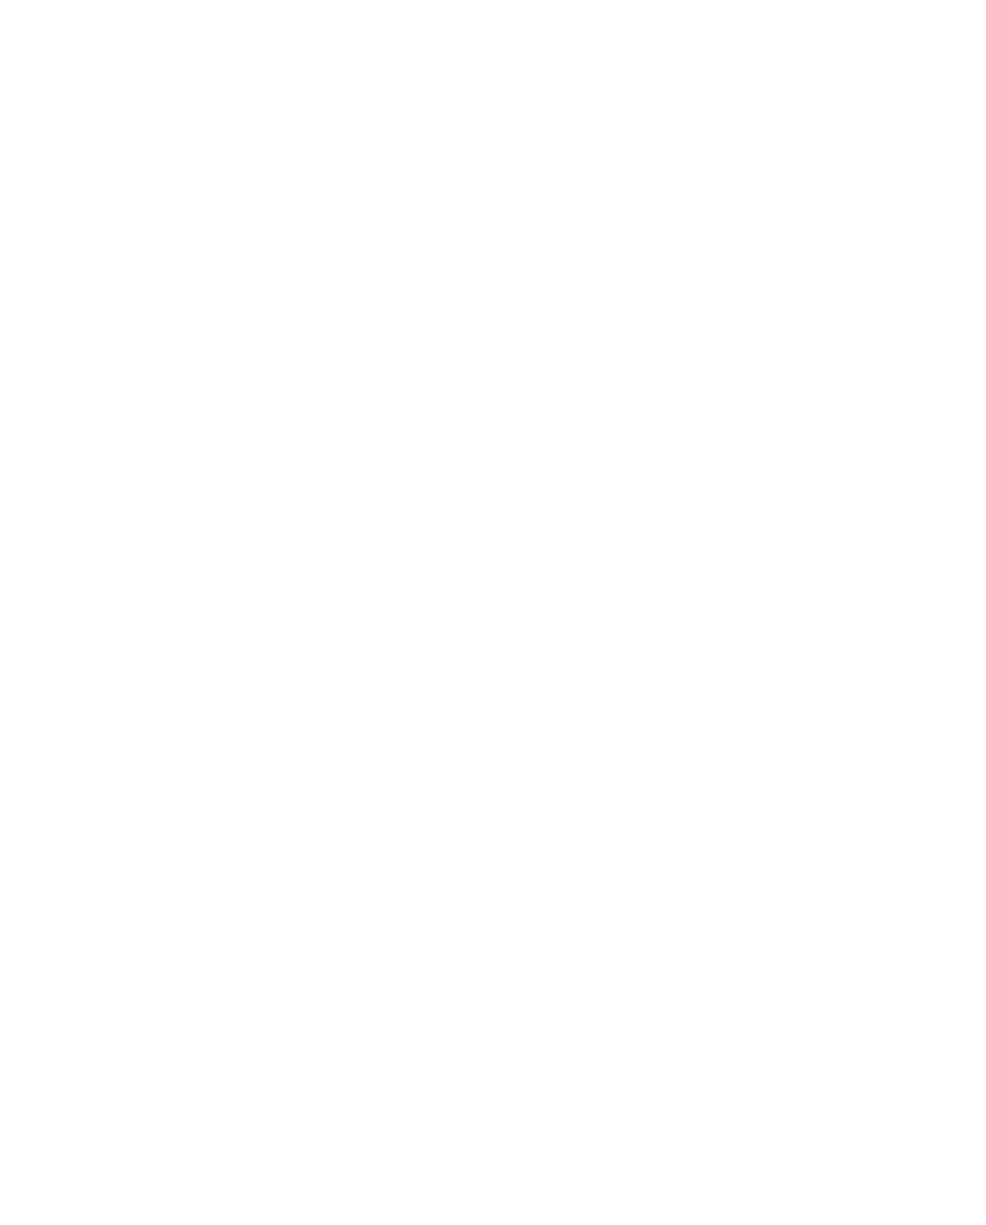 Liberty Latin America 로고